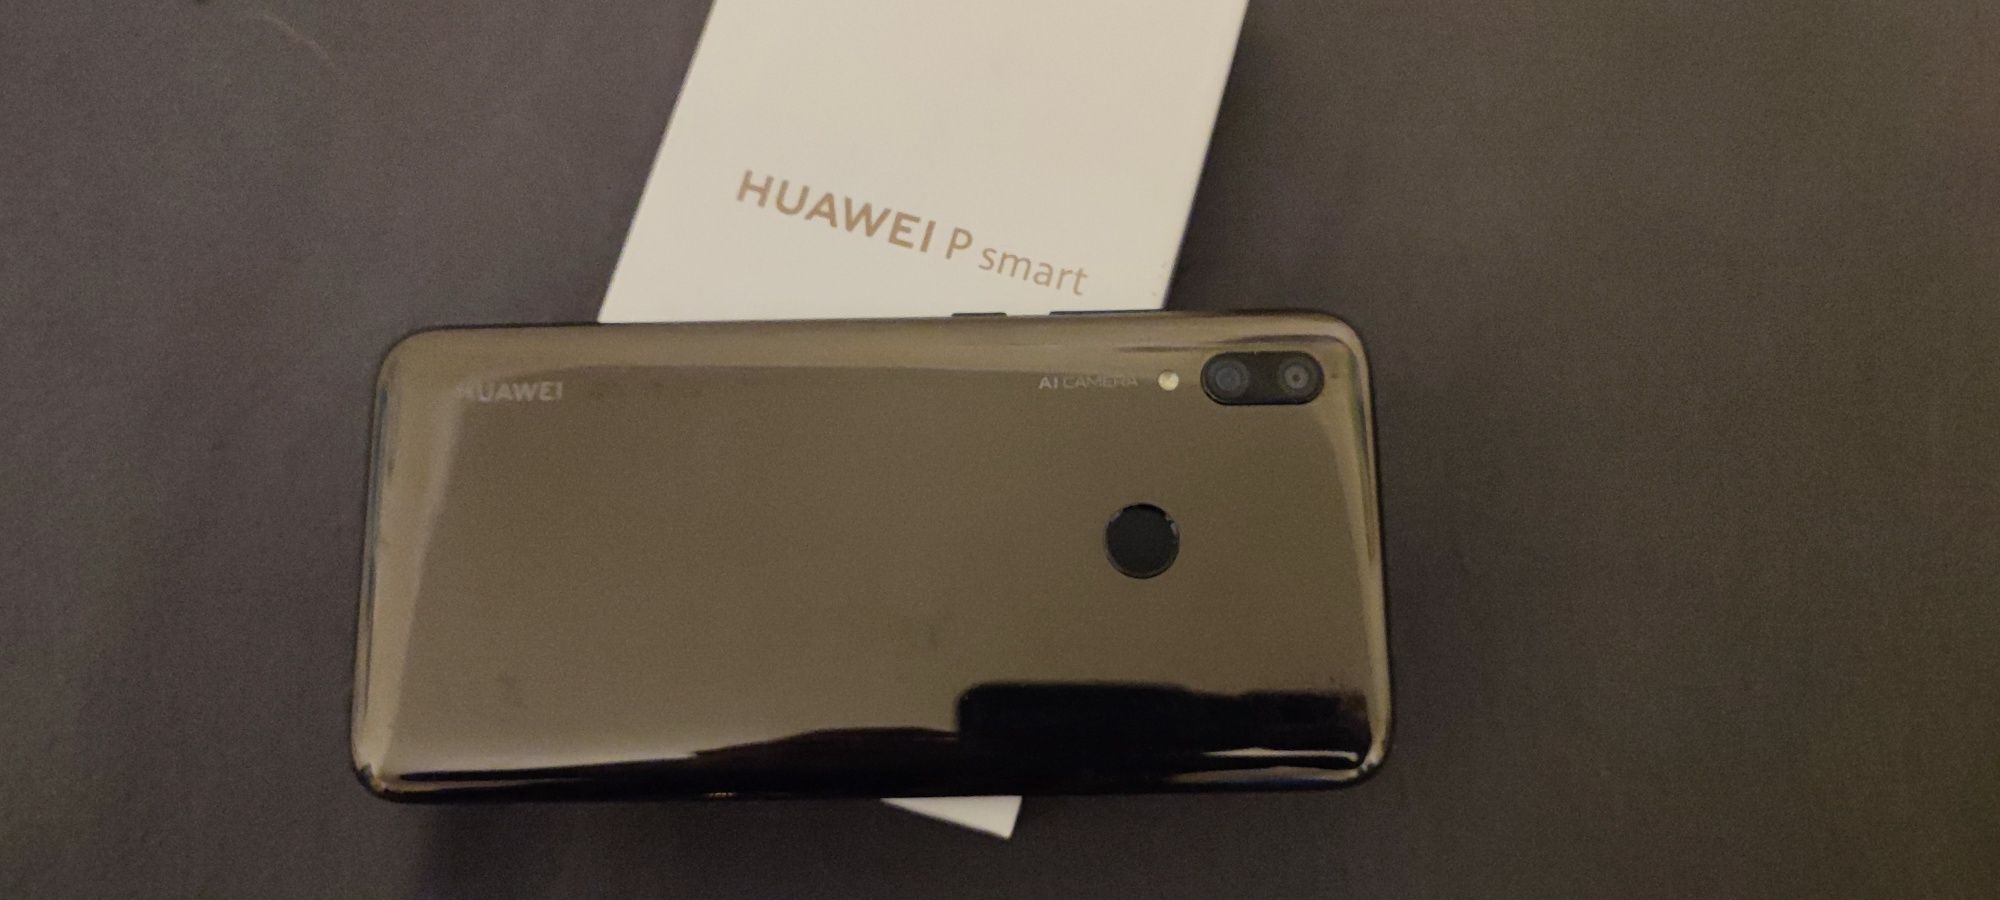 Huawei P SMART 2019 + gratis drugi z pękniętą szybką